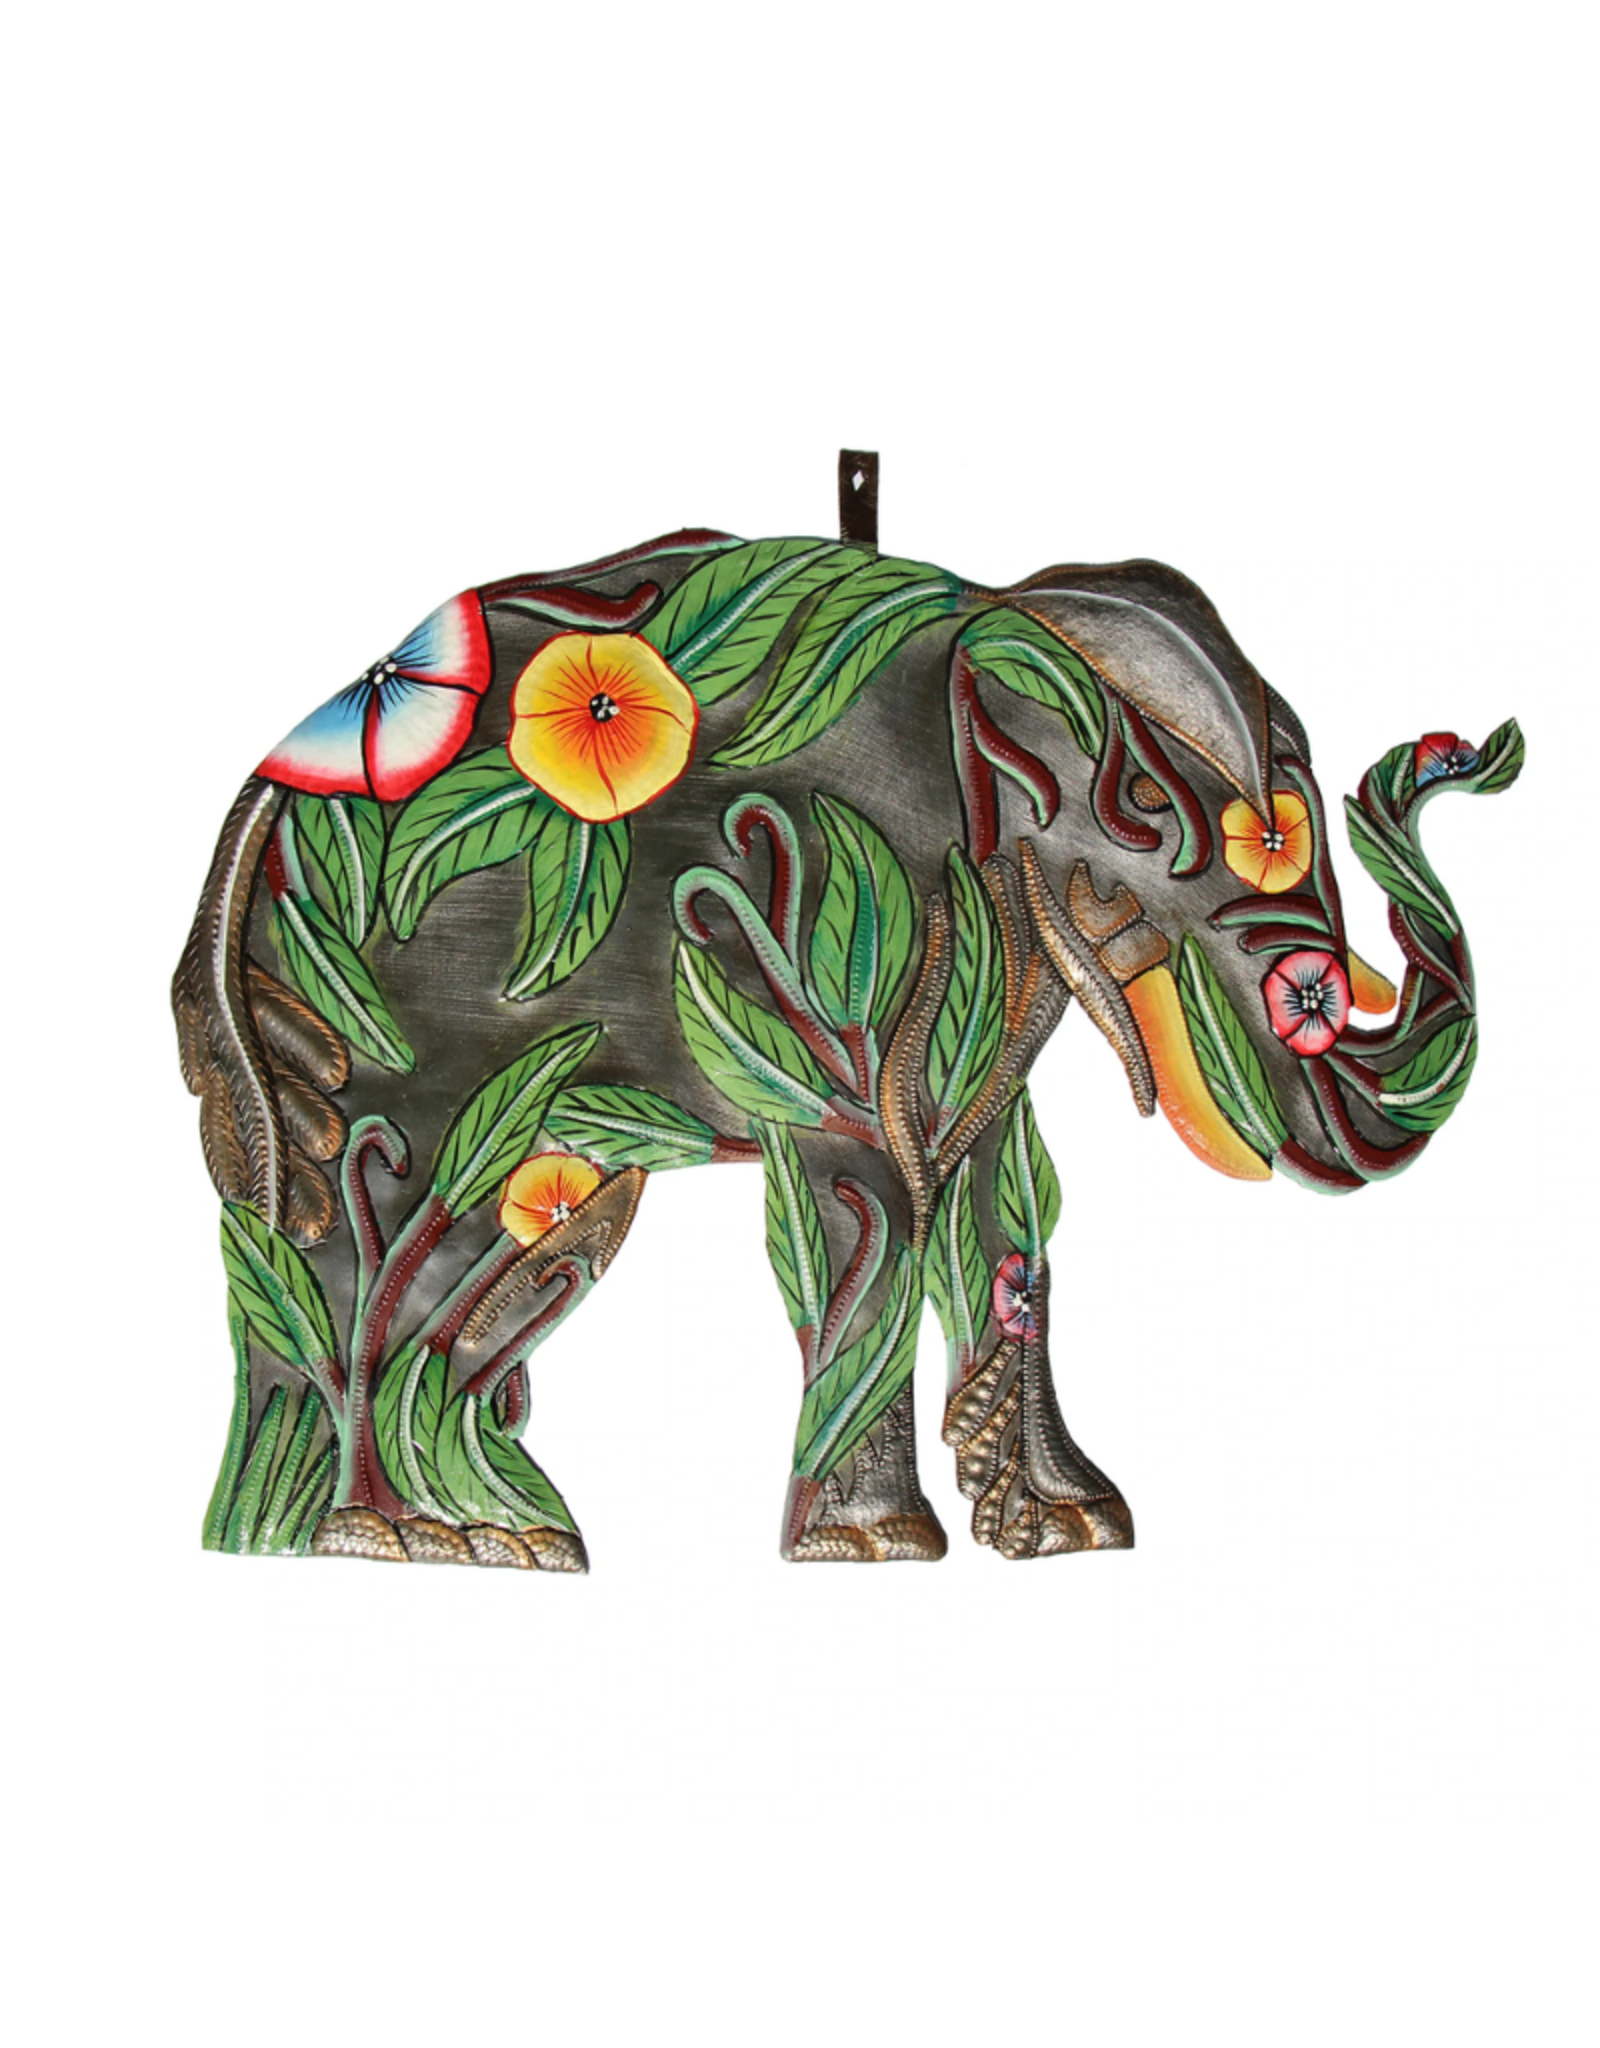 Global Crafts Hibiscus Elephant Haitan Metal Art 14 inch - Haiti